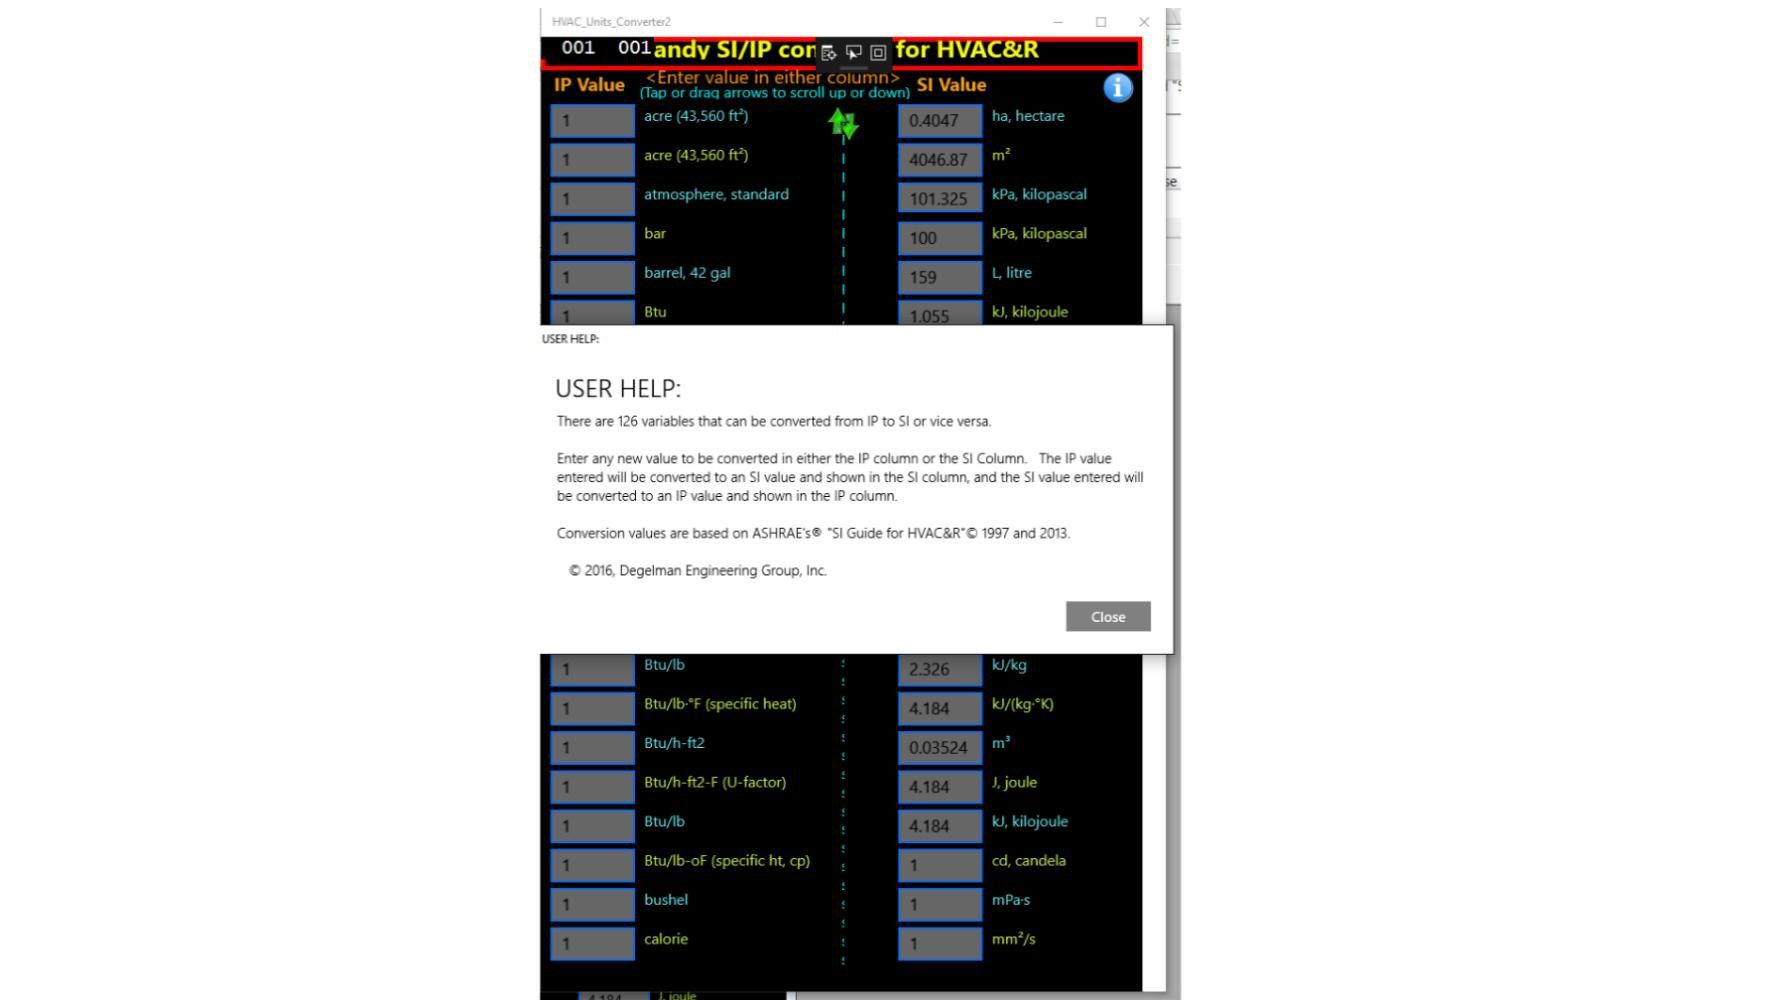 Screen showing the Help screen.